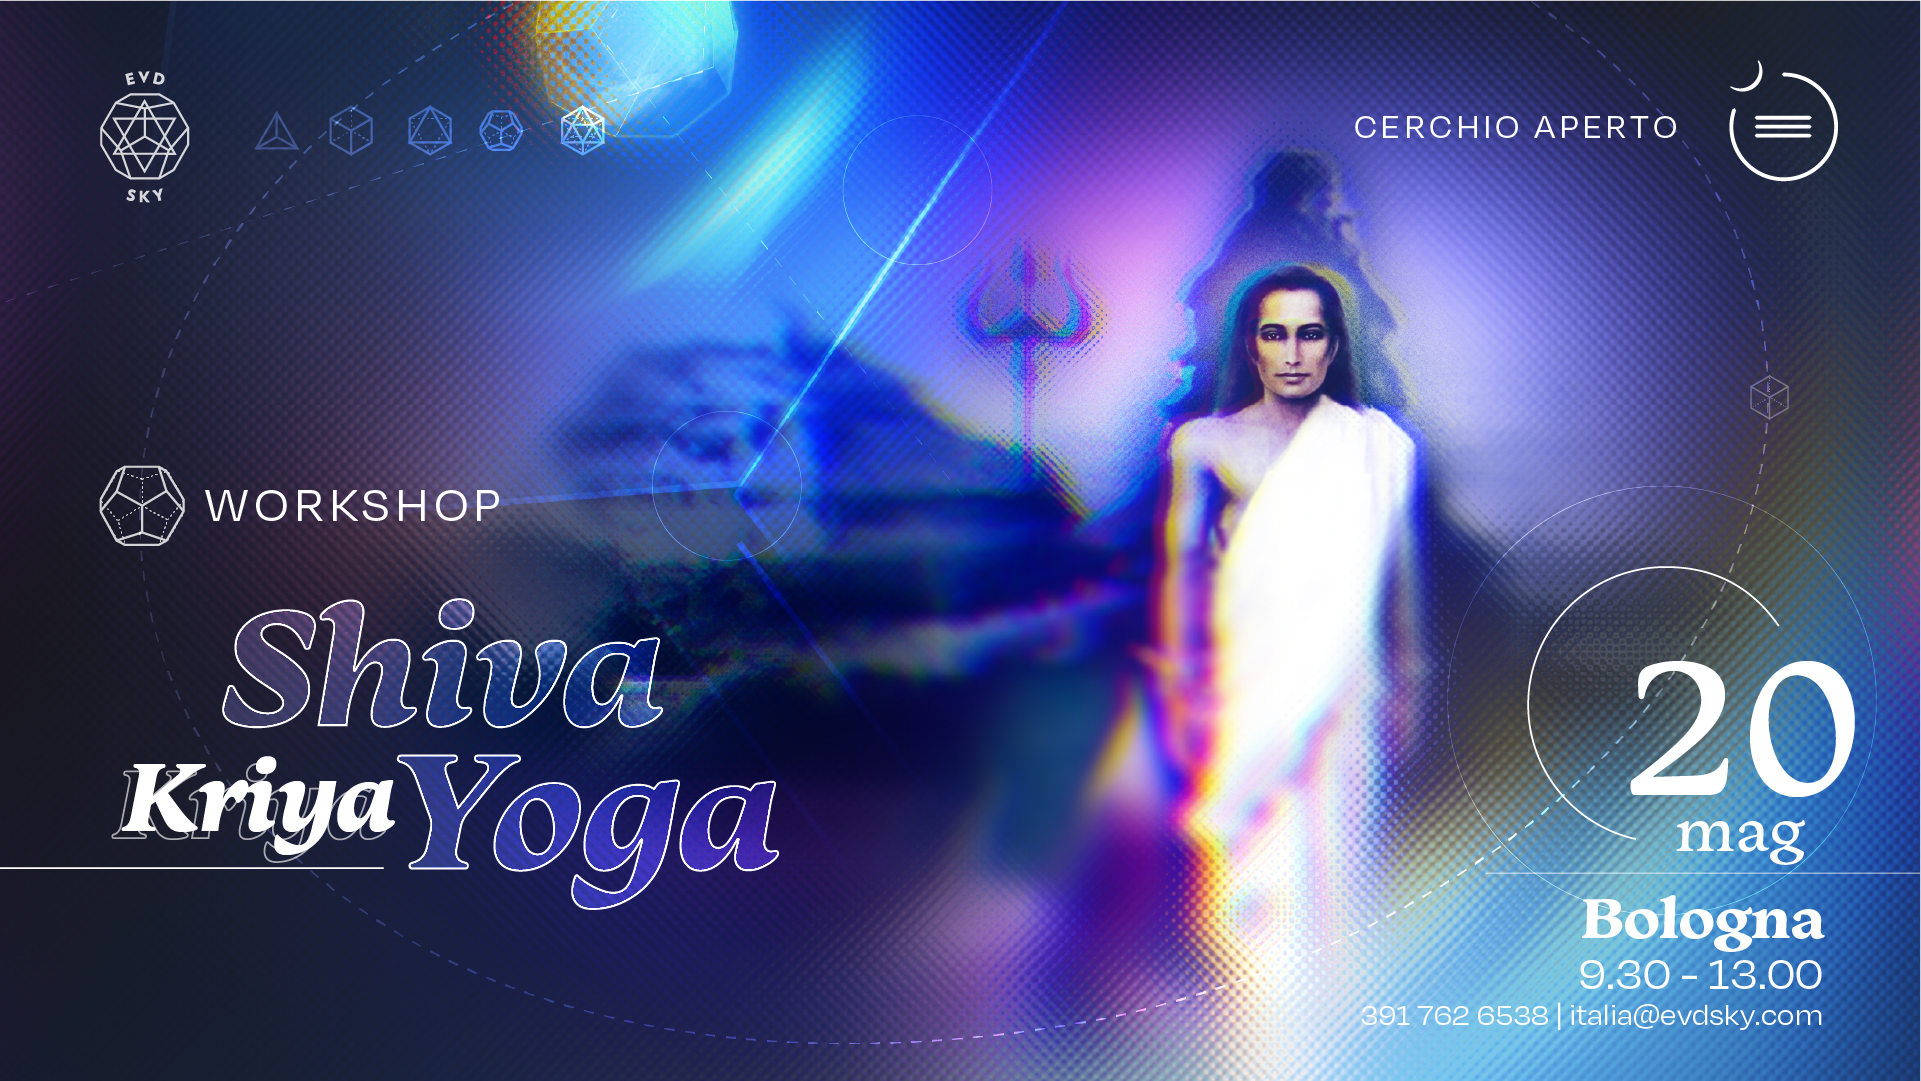 BOLOGNA - Workshop Gratuito "Shiva Kriya Yoga: Cerchio Aperto"